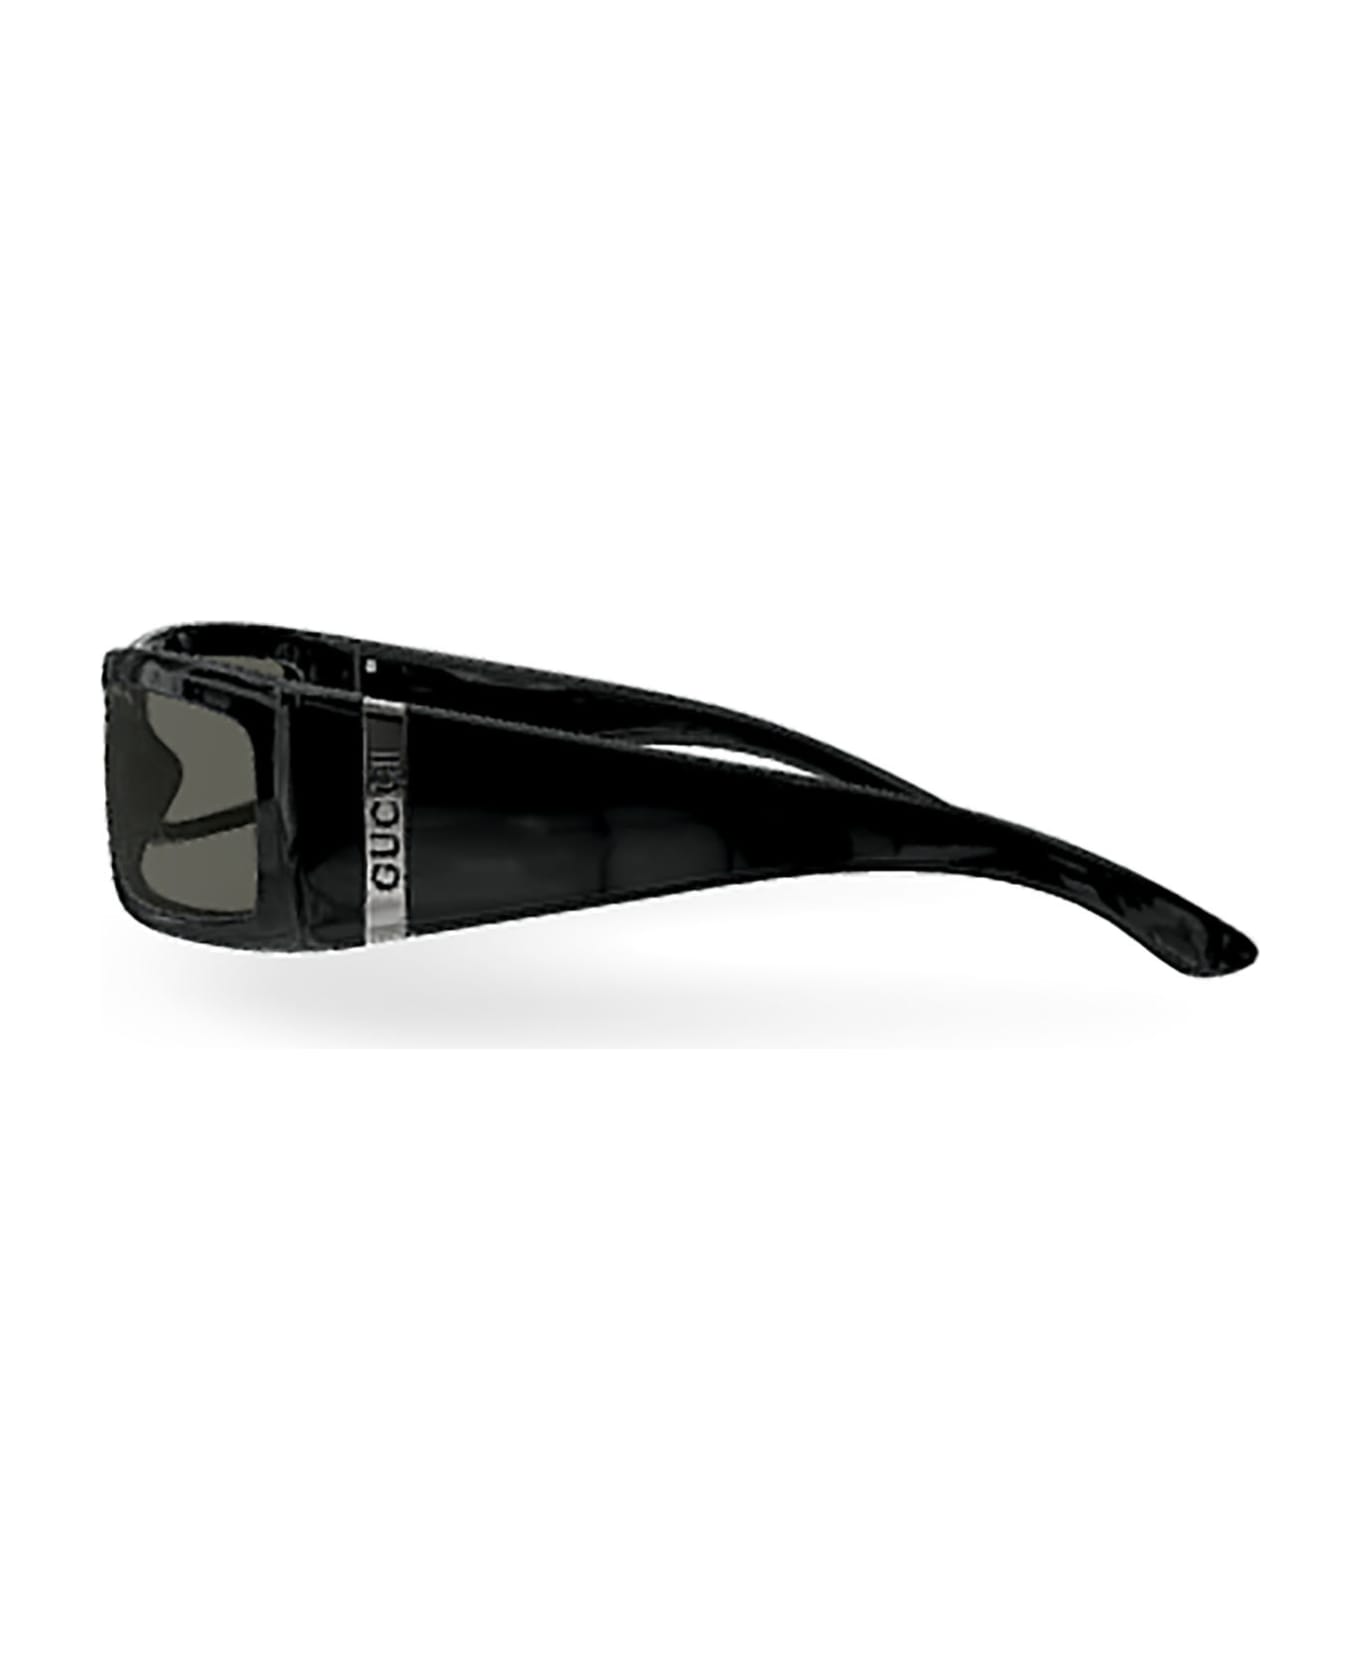 Gucci Eyewear GG1492S Sunglasses - Black Black Grey